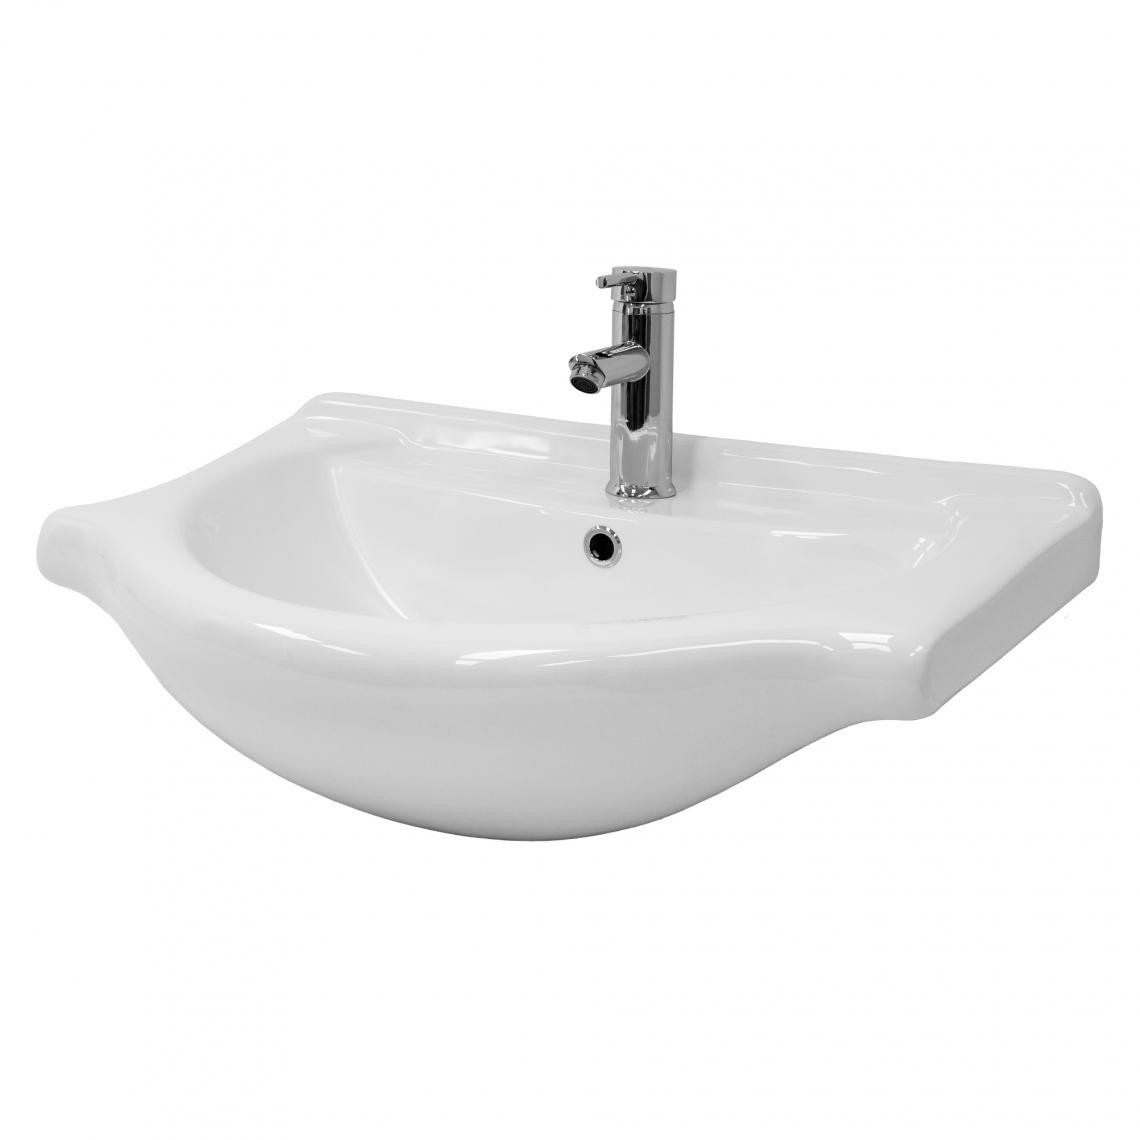 ML design modern living - Céramique lavabo blanc, brillant lavabo à poser 675x215x515 mm - Lavabo